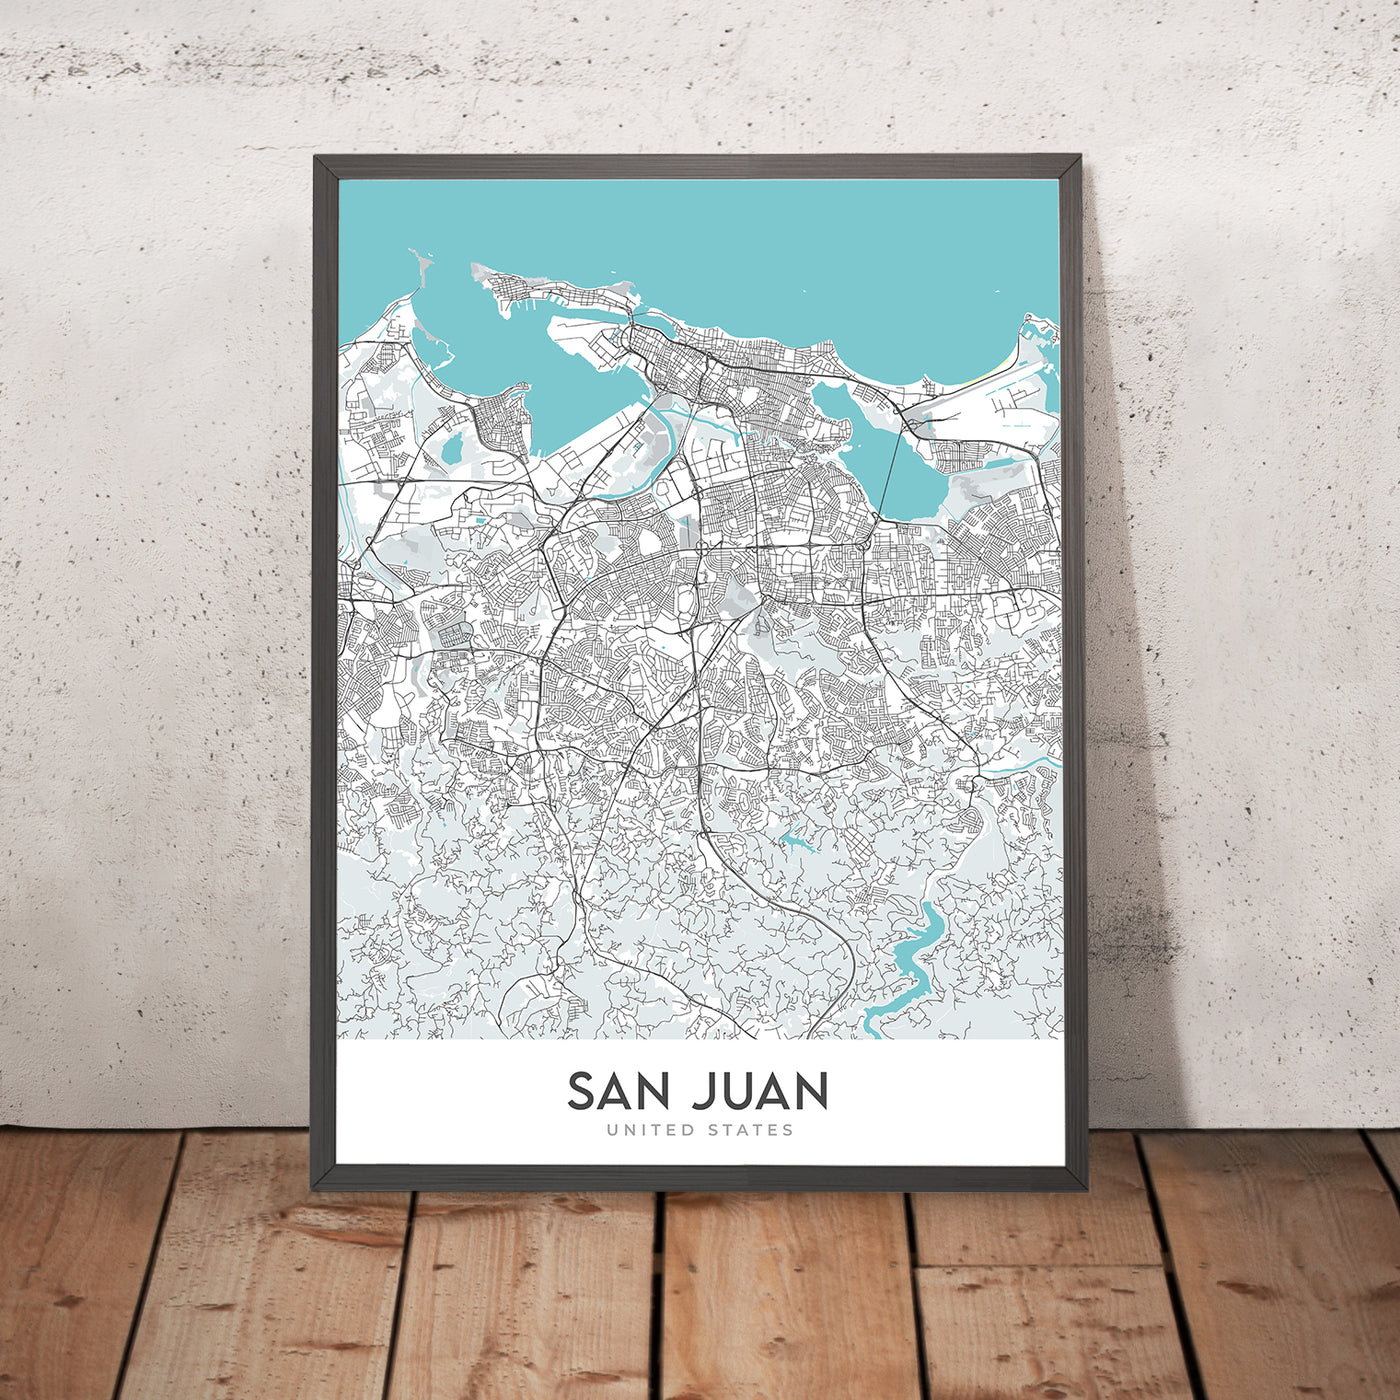 Modern City Map of San Juan, Puerto Rico: Condado, Old Town, El Yunque, Castillo San Felipe, Castillo San Cristóbal